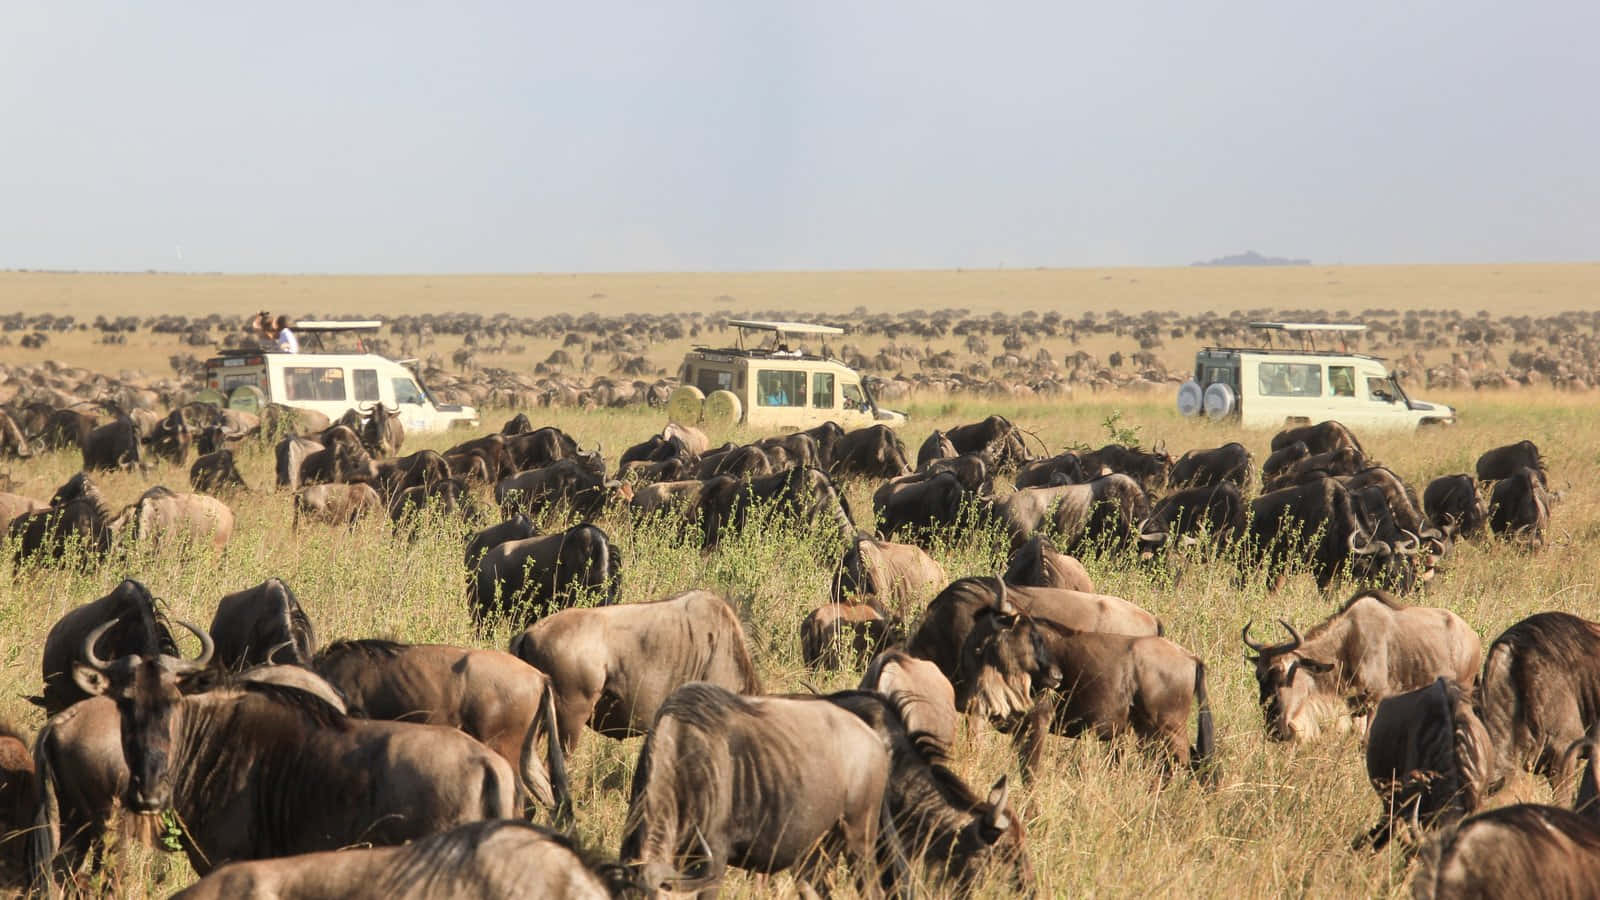 Wildebeest Migration in the Serengeti National Park Wallpaper